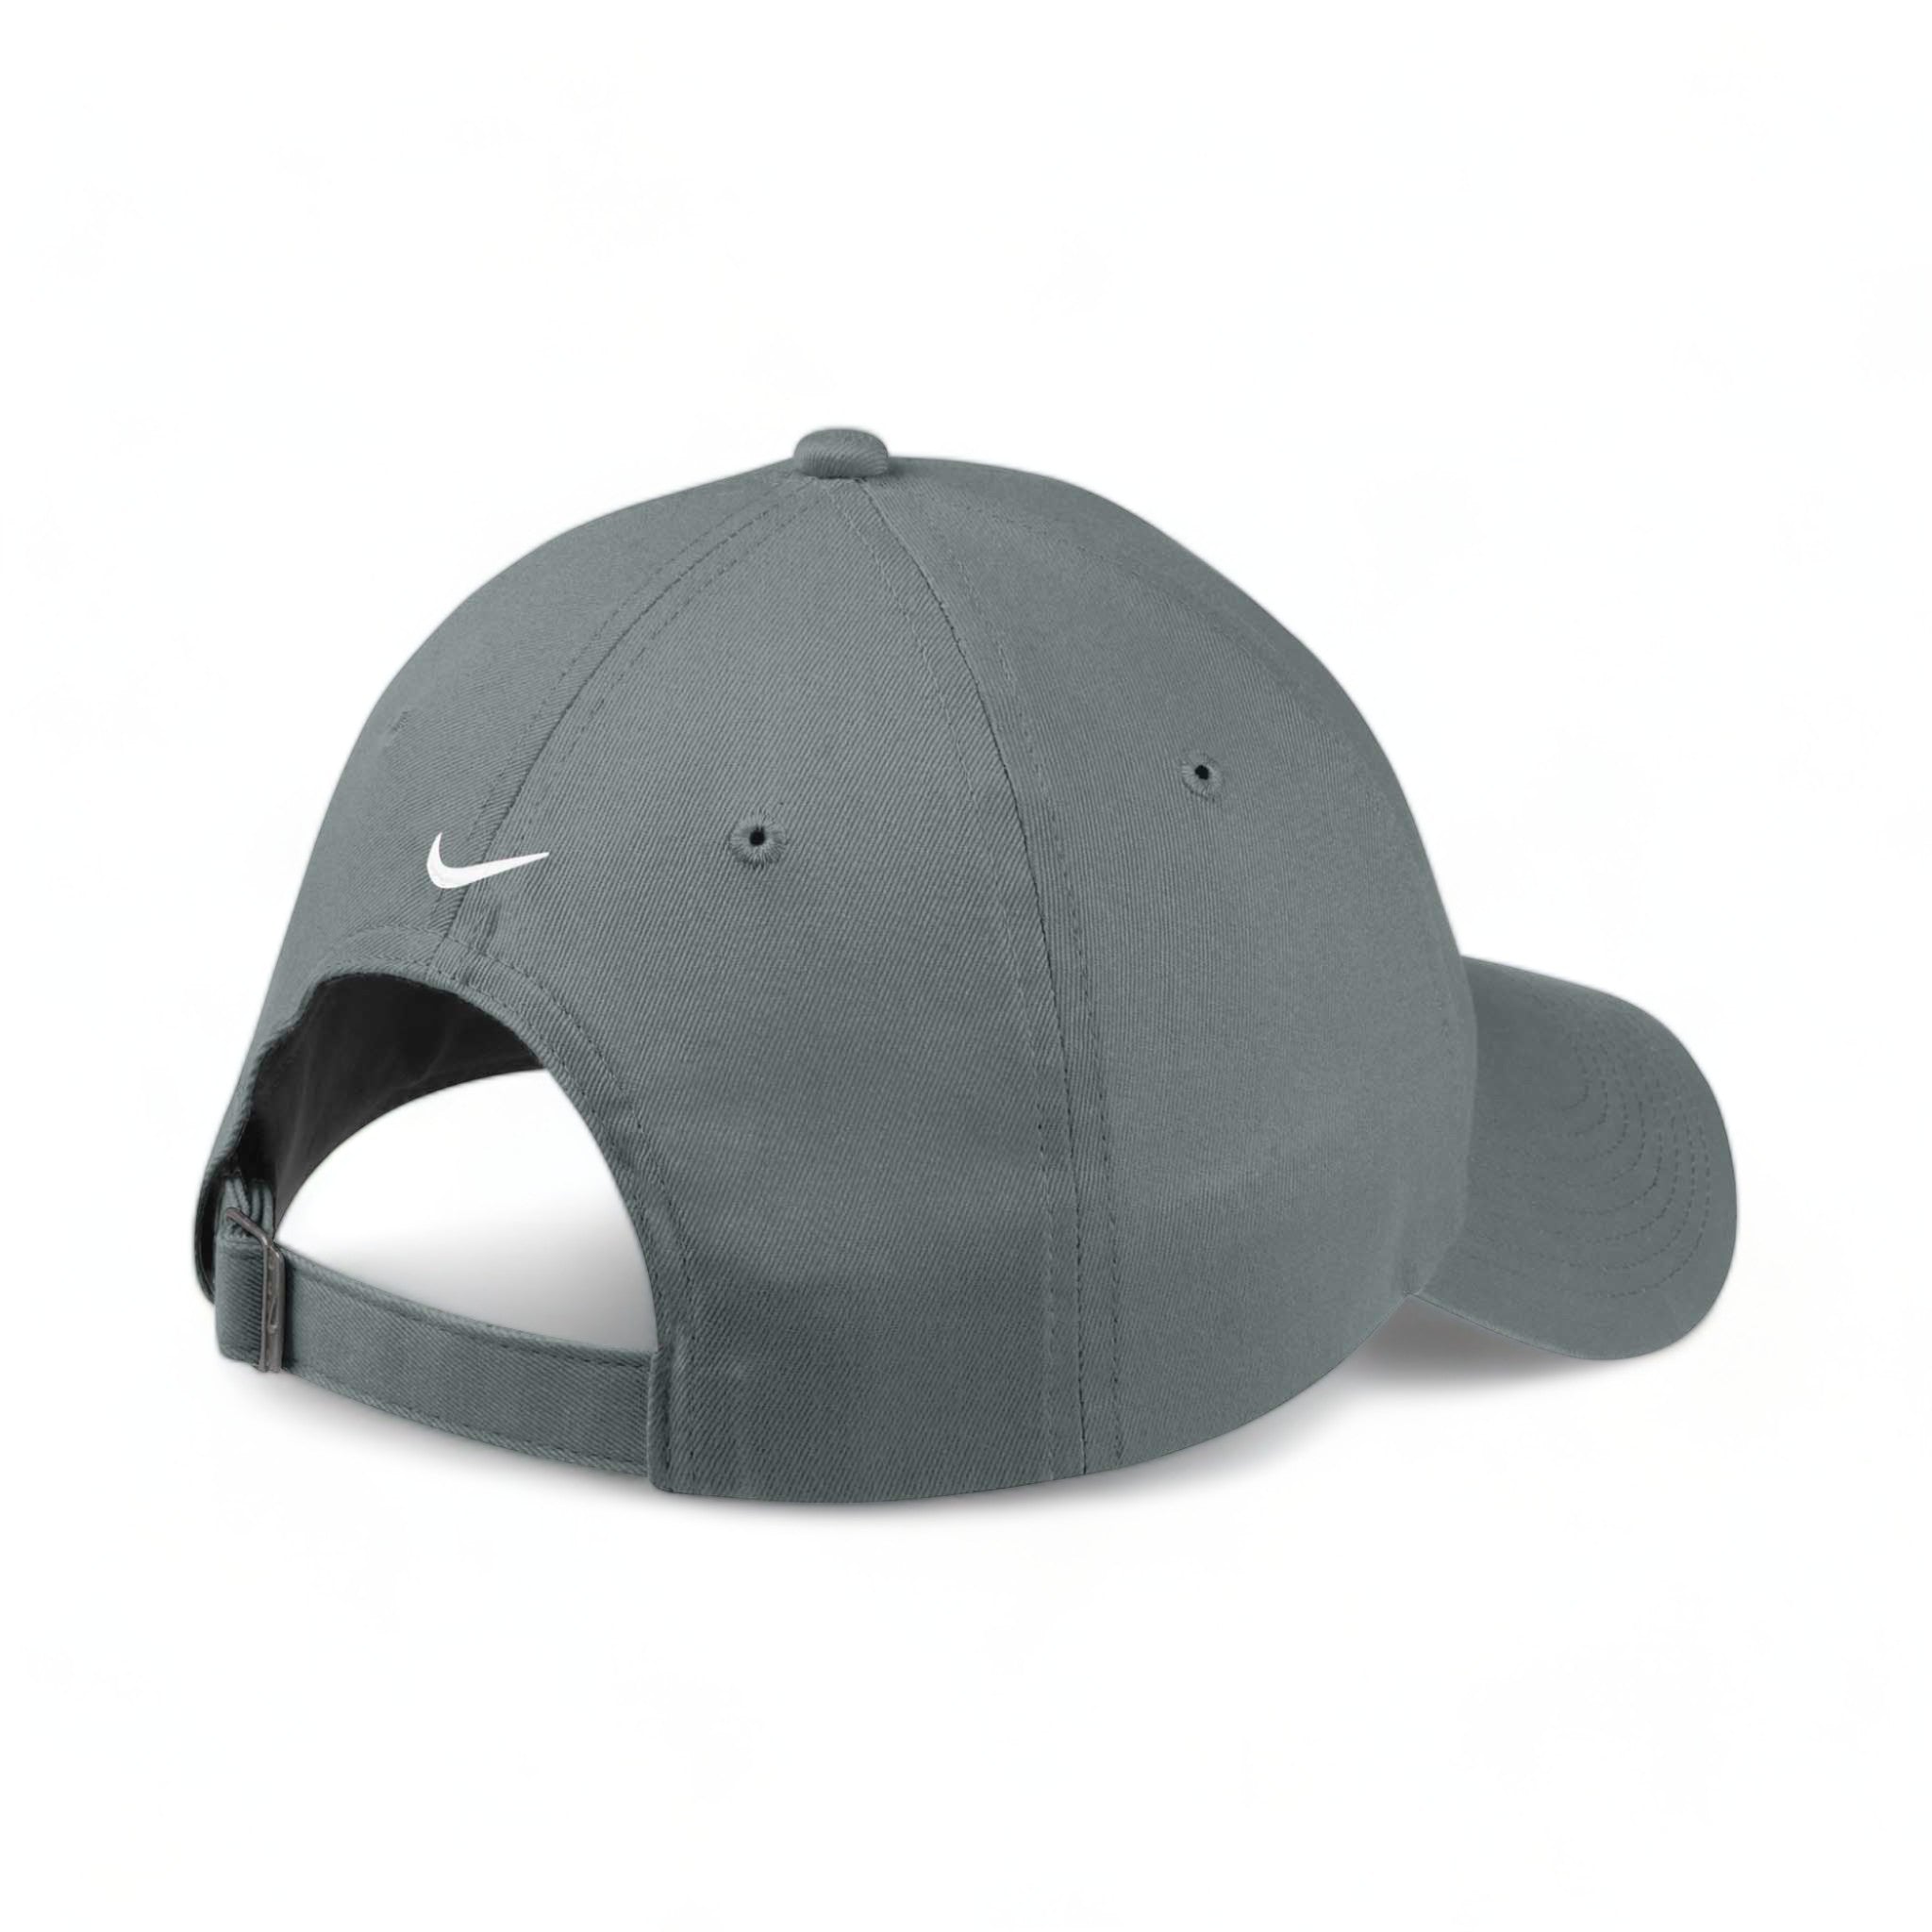 Back view of Nike NKFB6449 custom hat in dark grey